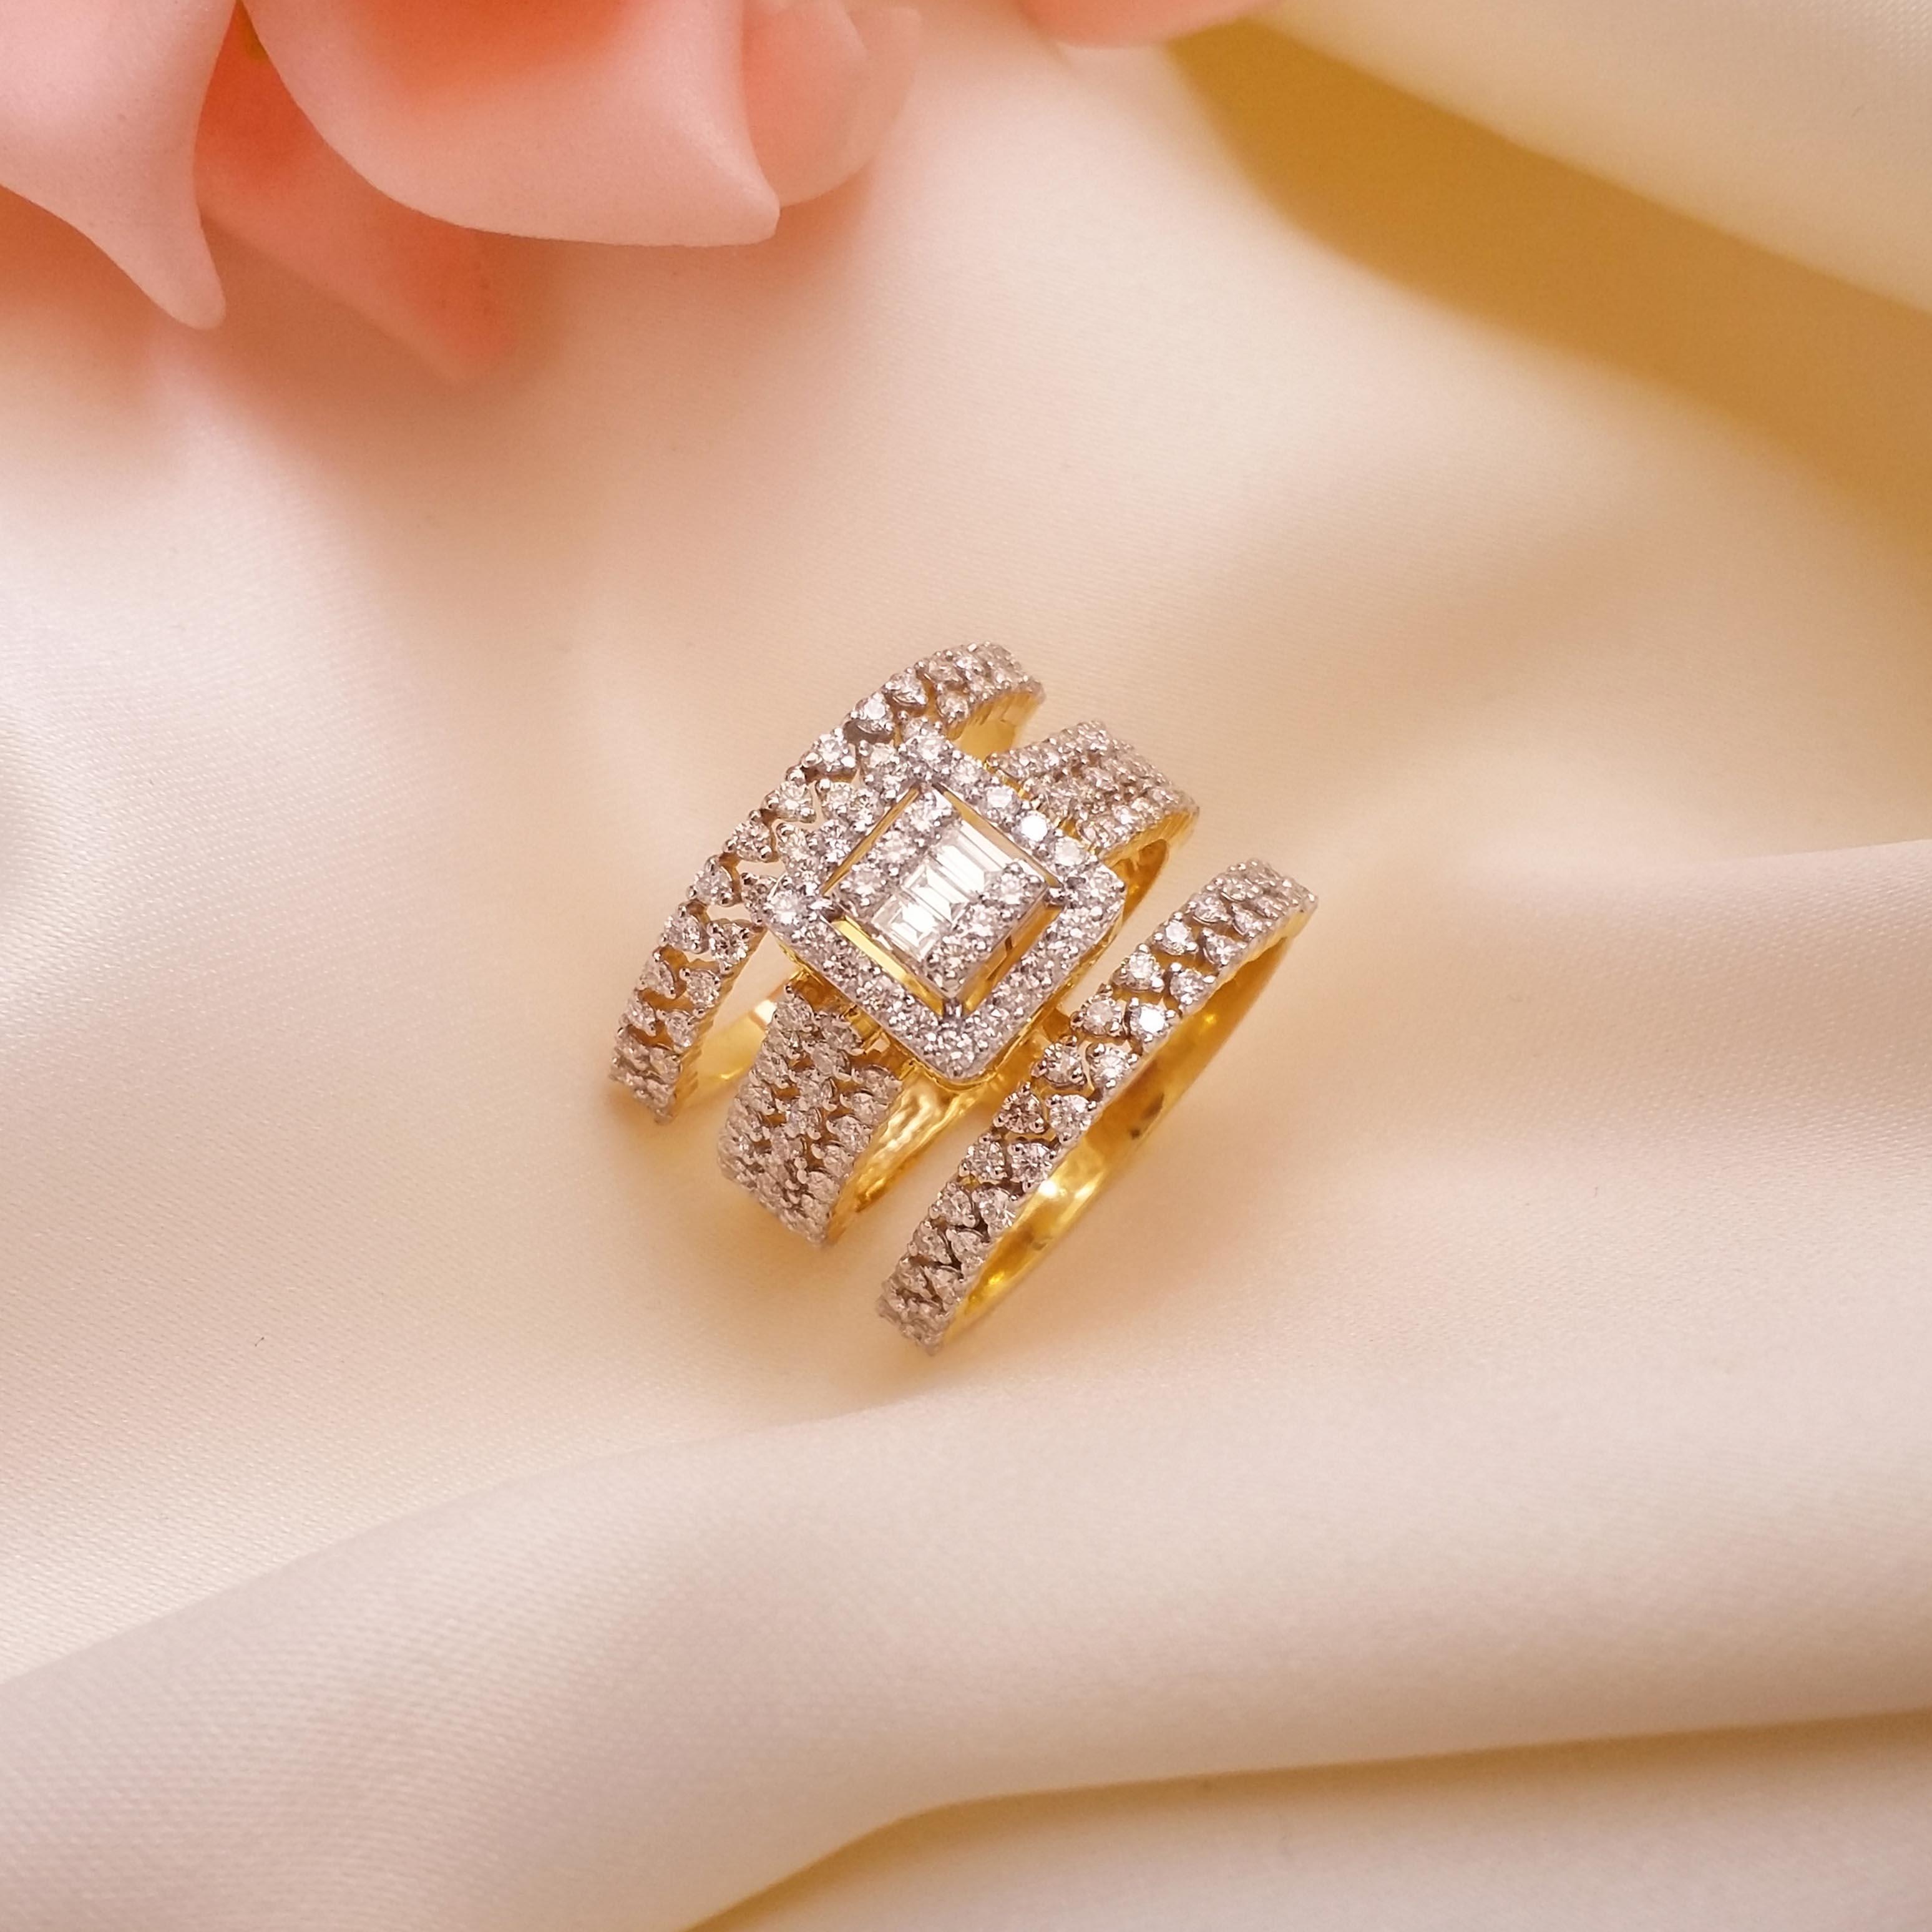 Silver Cocktail Diamond Ring | Glamorous Elegance – Eri Silvers